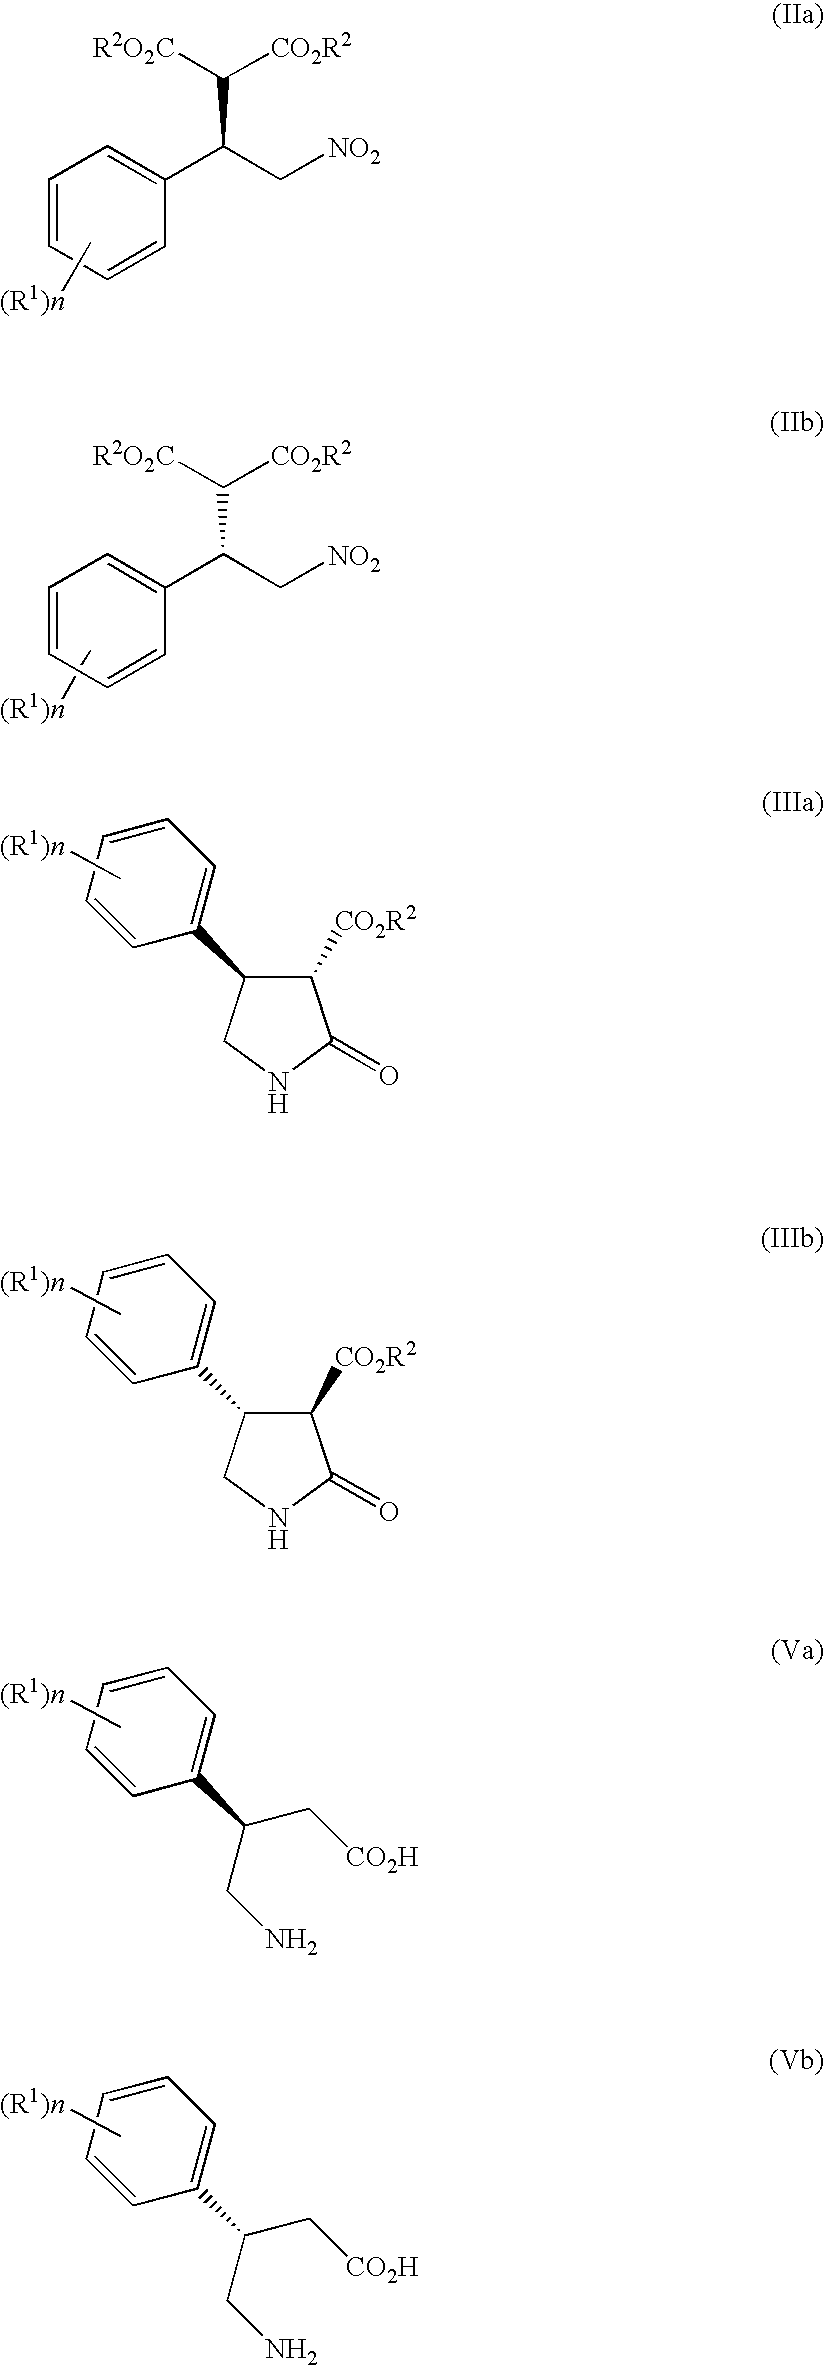 Method of producing optically active 4-amino-3-substituted phenylbutanoic acid